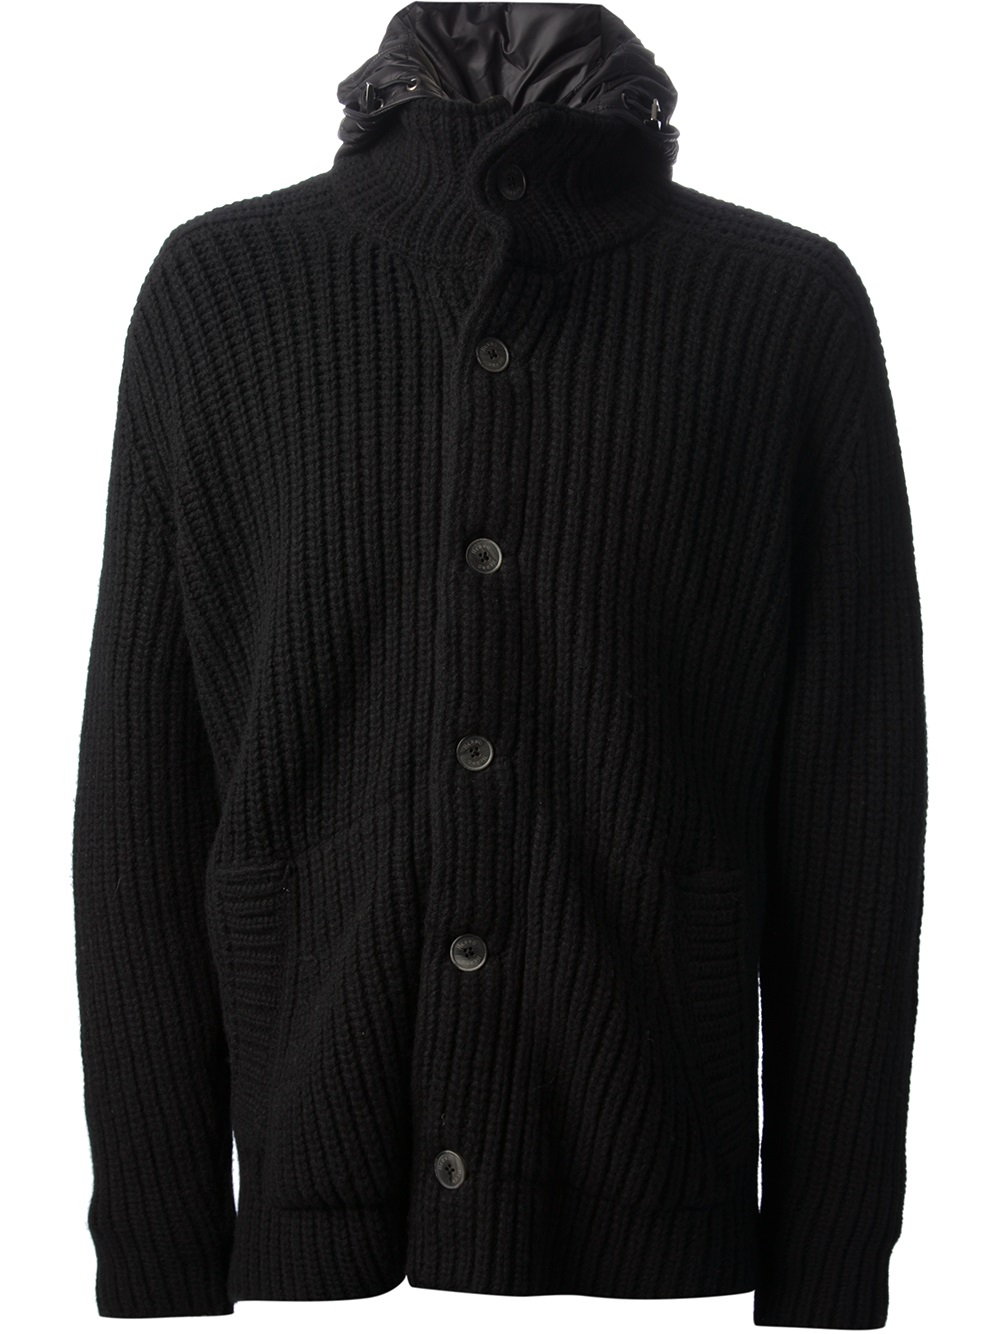 Herno Hooded Cardigan in Black for Men - Lyst